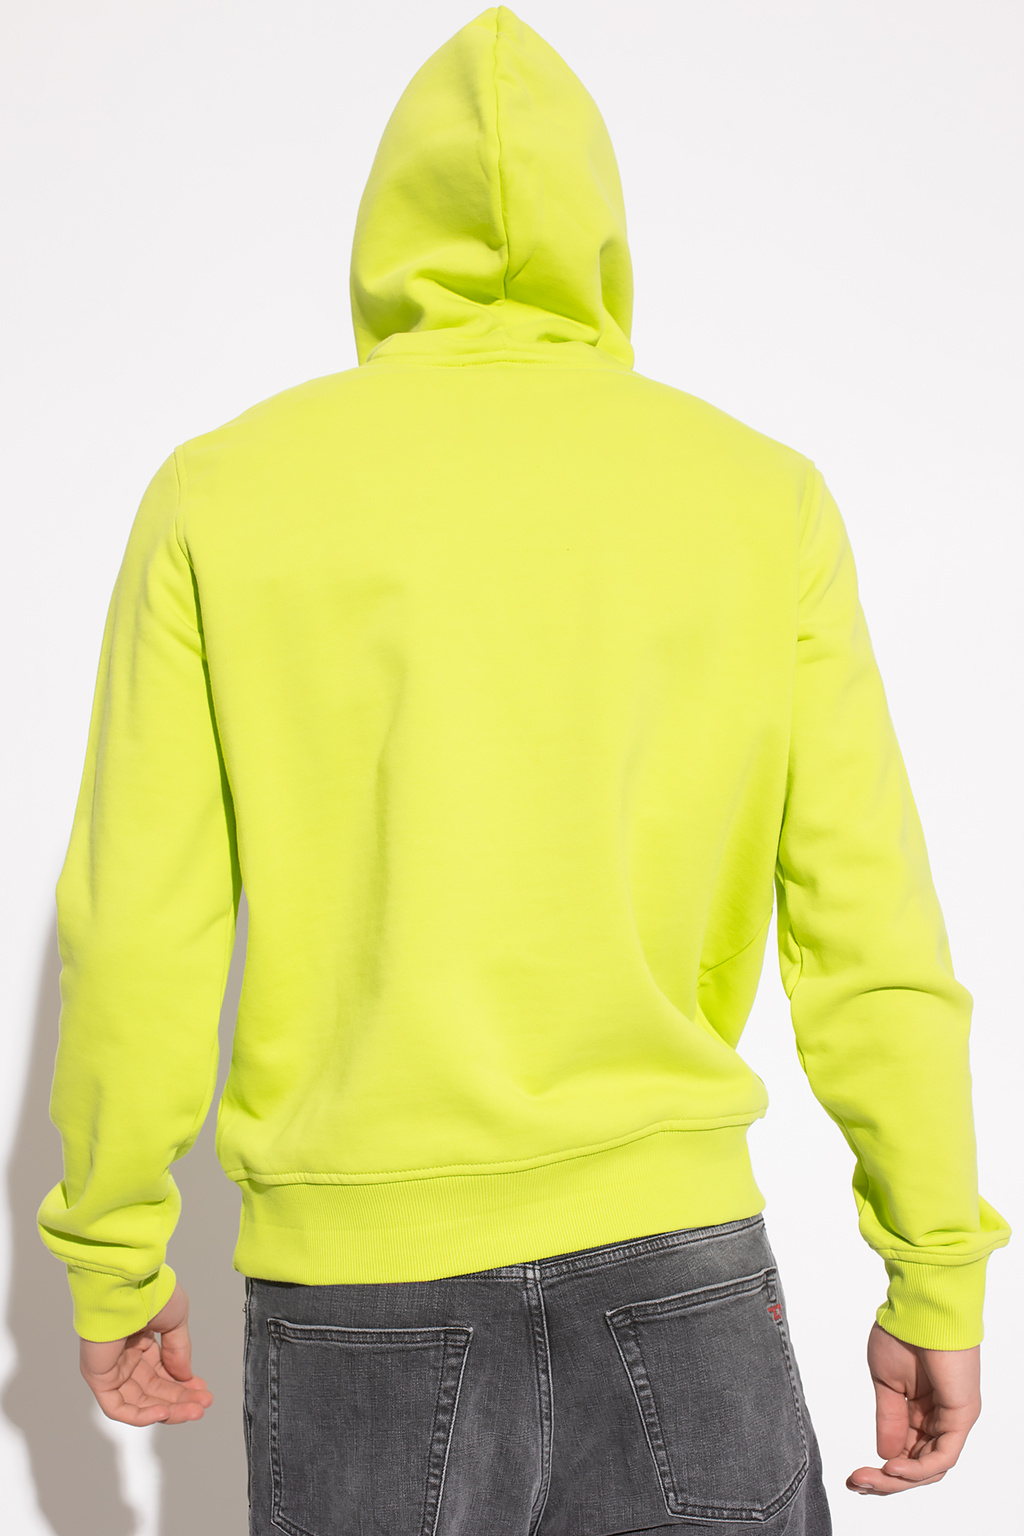 Diesel ‘S-GINN’ sweatshirt | Men's Clothing | Vitkac